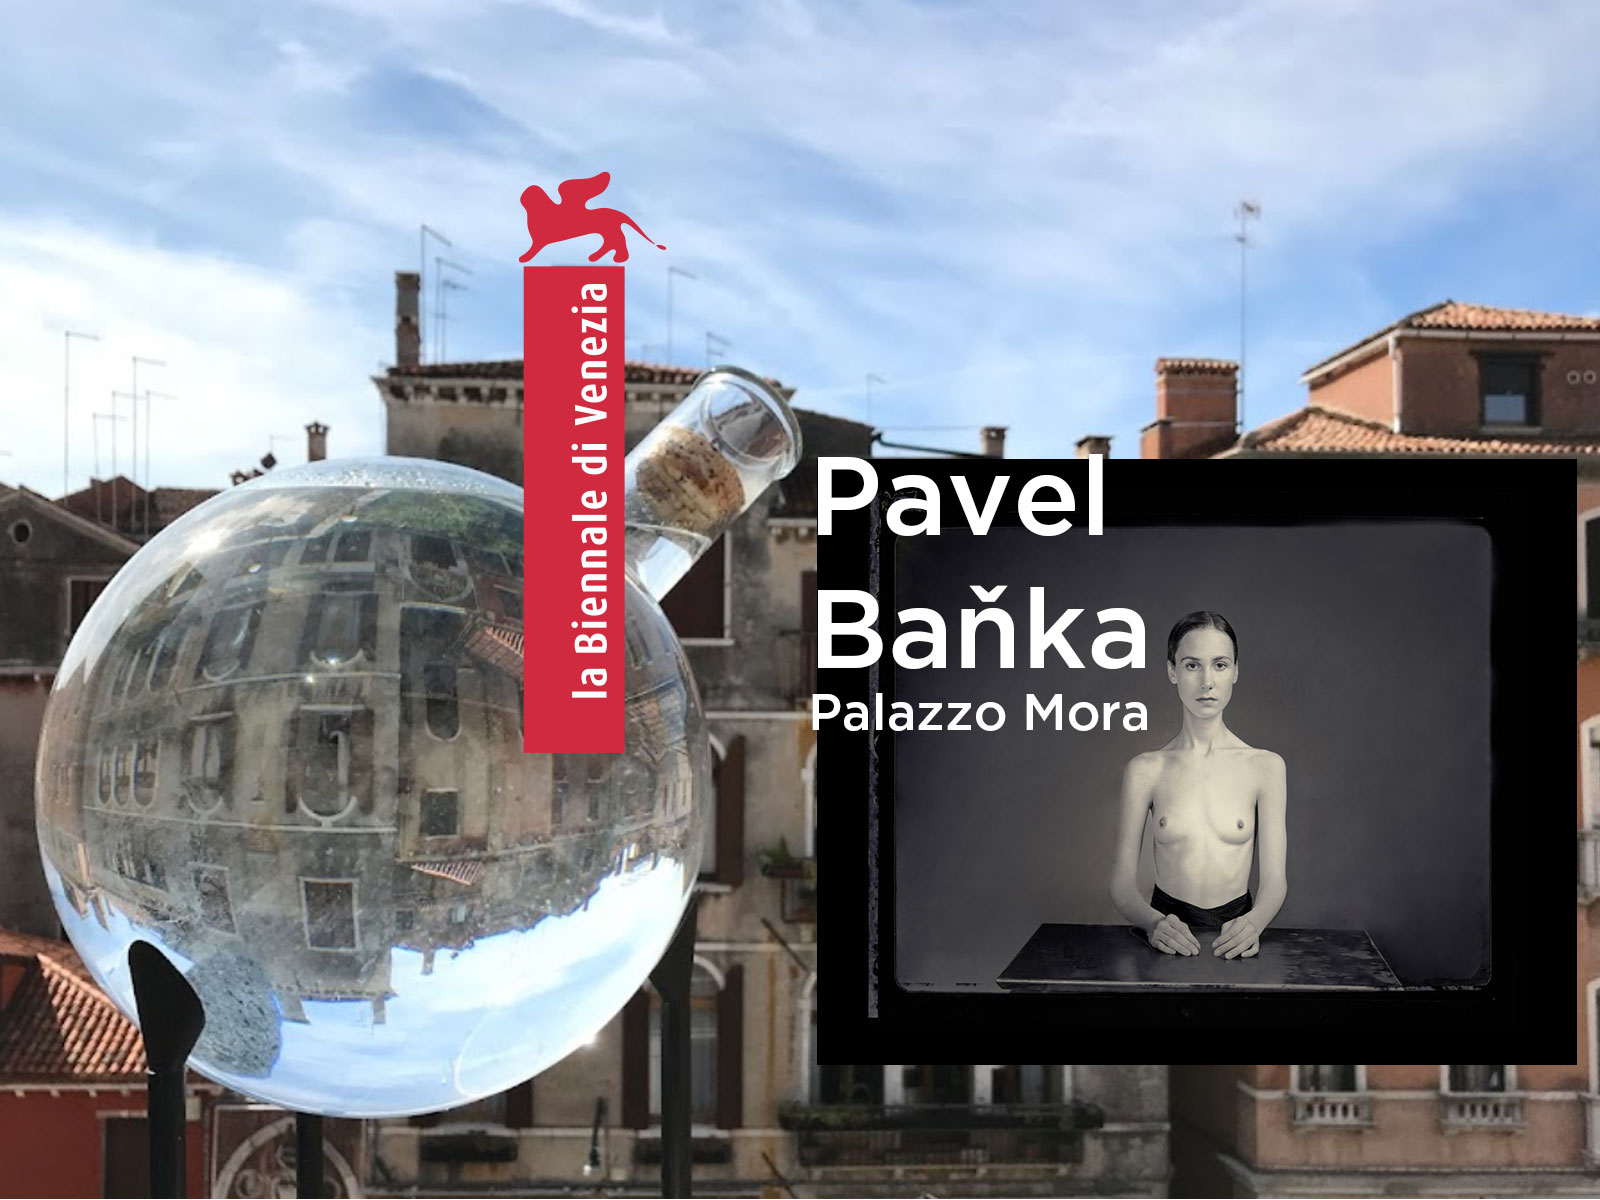 Pavel Baňka on Display at Venice Biennale presented by Cermak Eisenkraft in Partnership with u(p)m